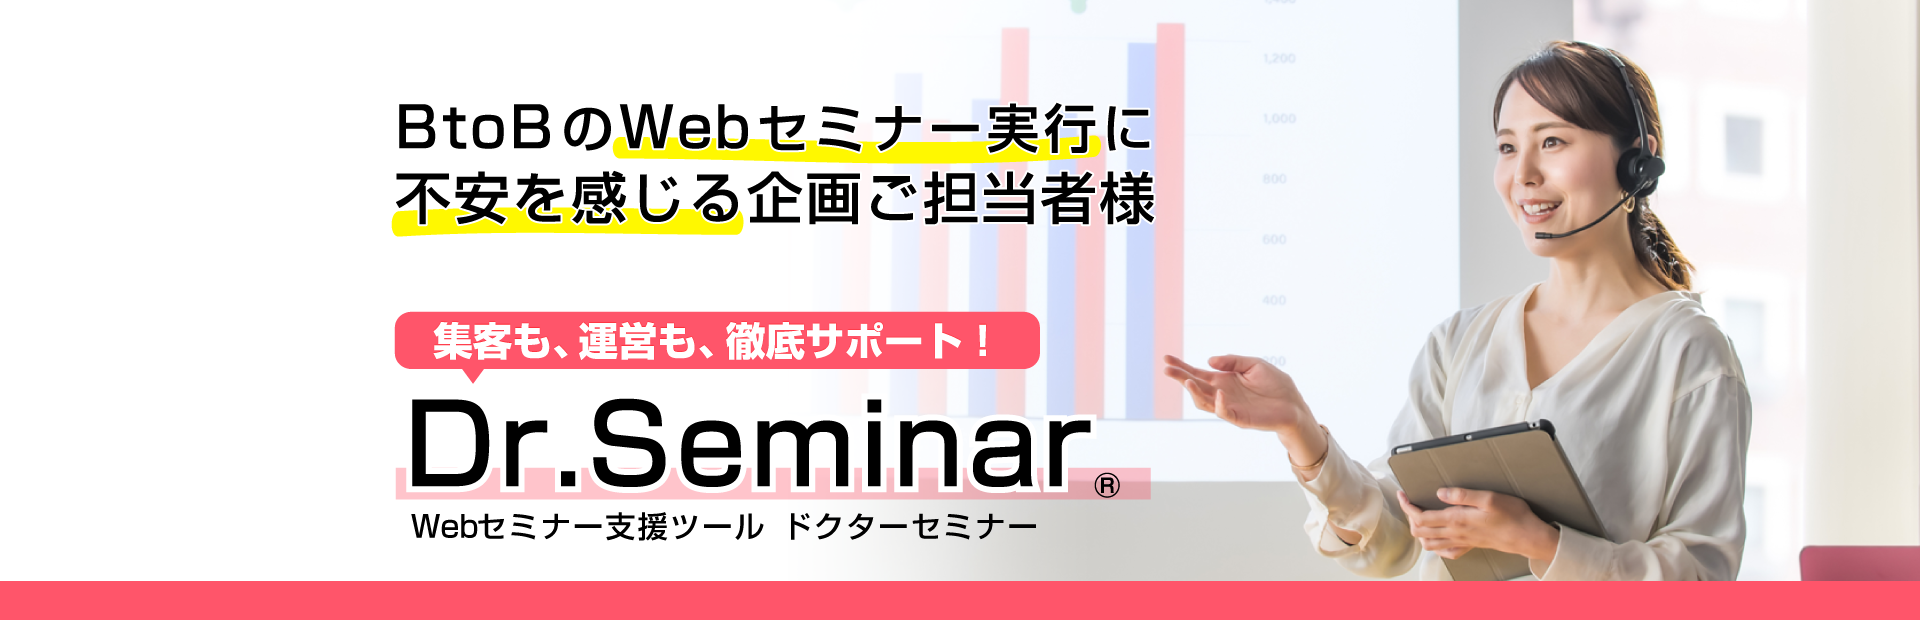 Webセミナー実行支援ツールDr.Seminar